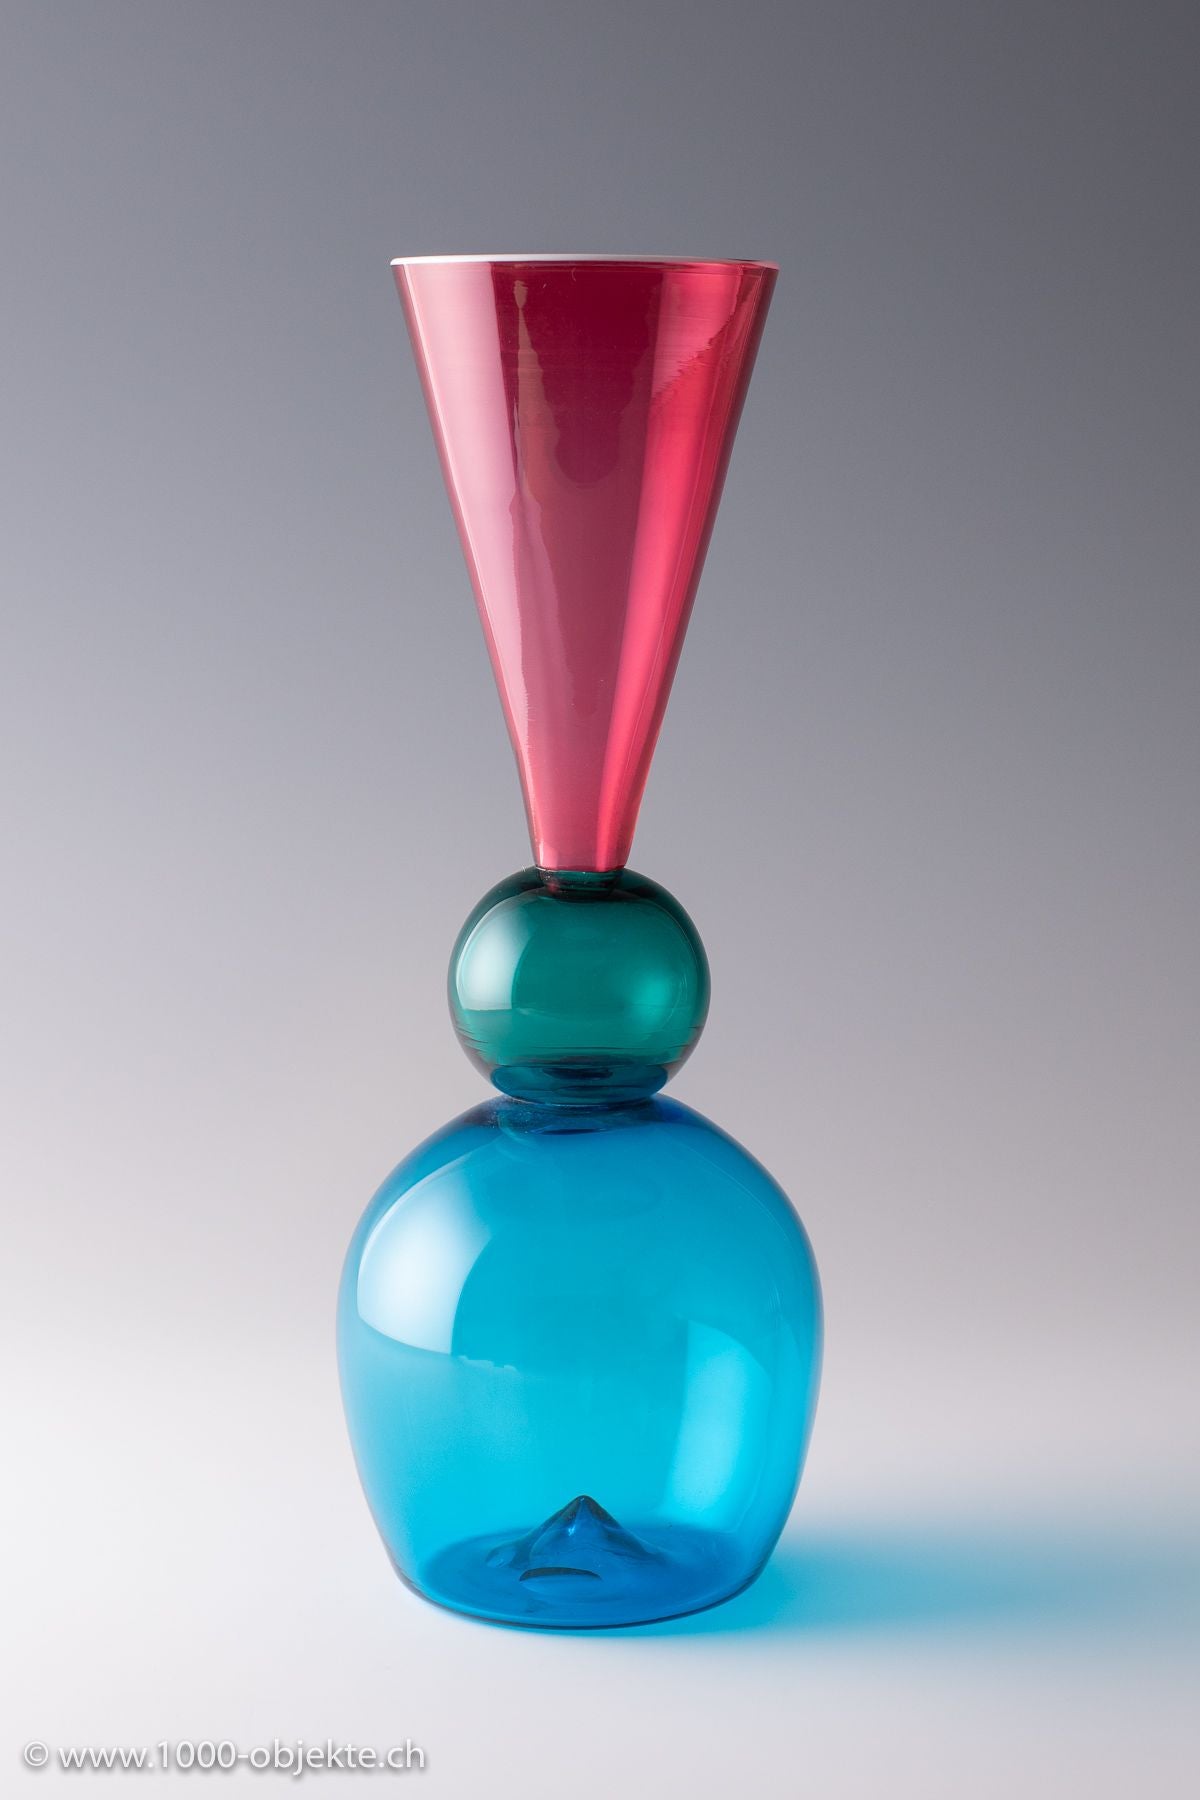 Yoochi Ohira. An incalmo vase in thin blown glass, 1988.